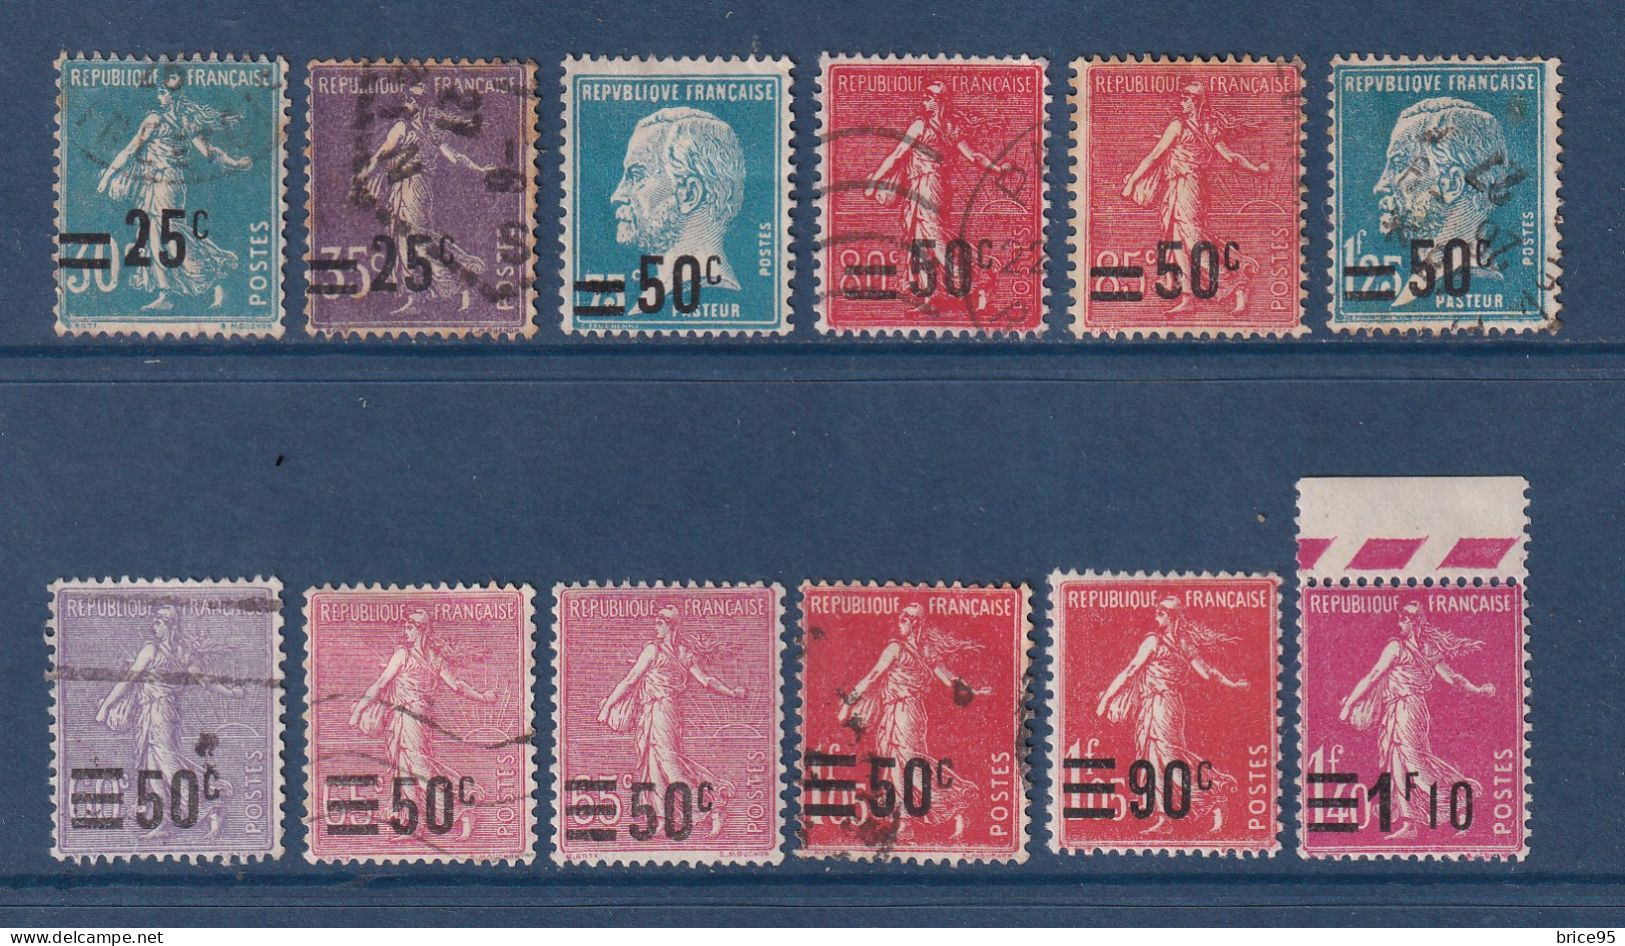 France - YT N° 217 à 228 - Oblitéré Et Neuf - 1924 à 1925 - Used Stamps